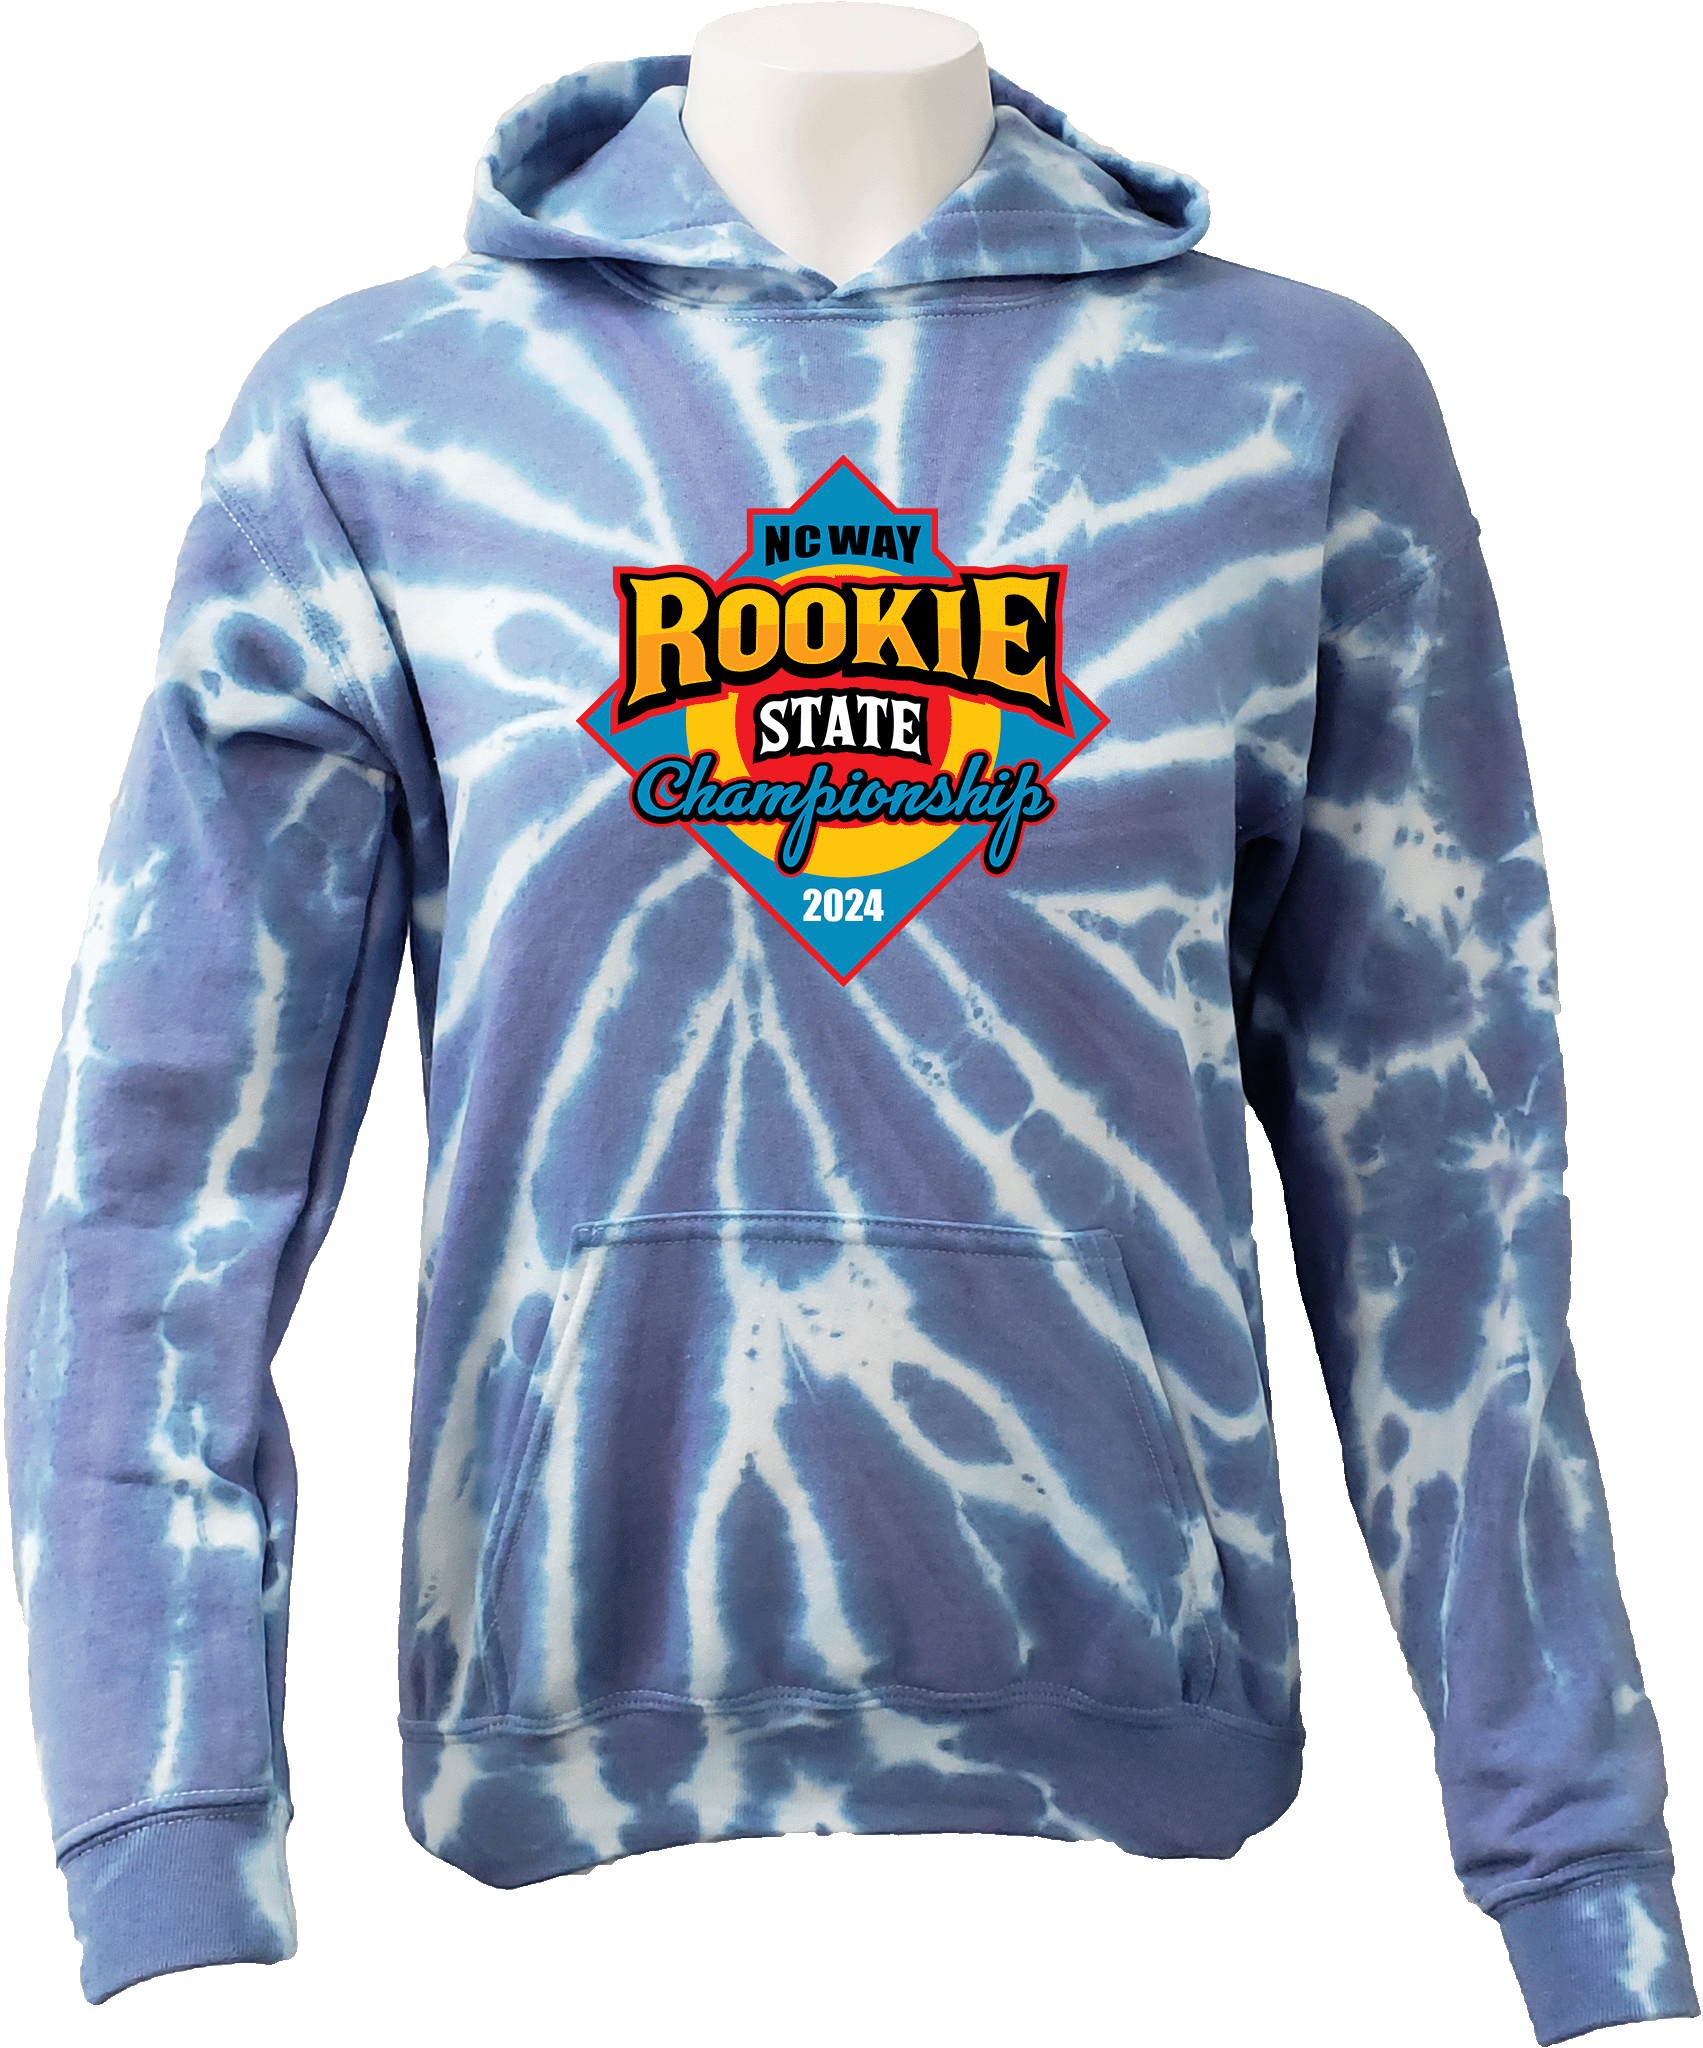 Tie-Dye Hoodies - 2024 NCWAY Rookie State Championship